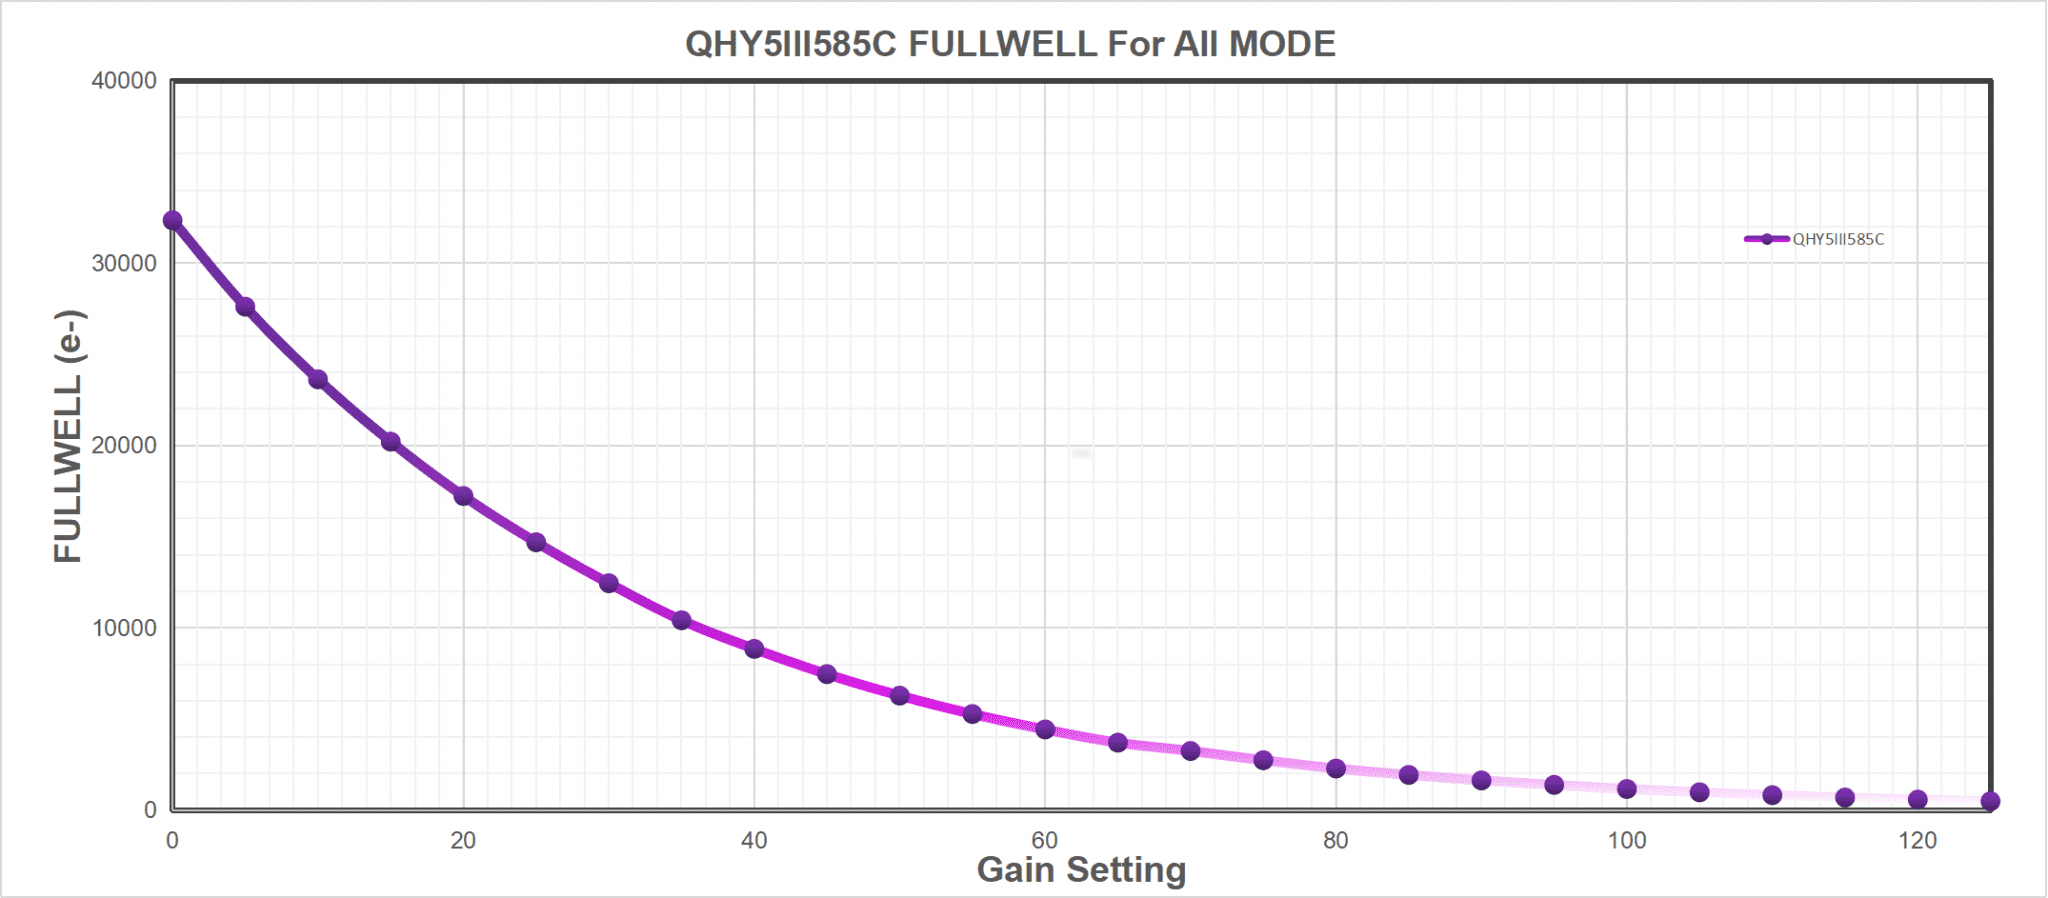 QHY 5-III-585C Fullwell